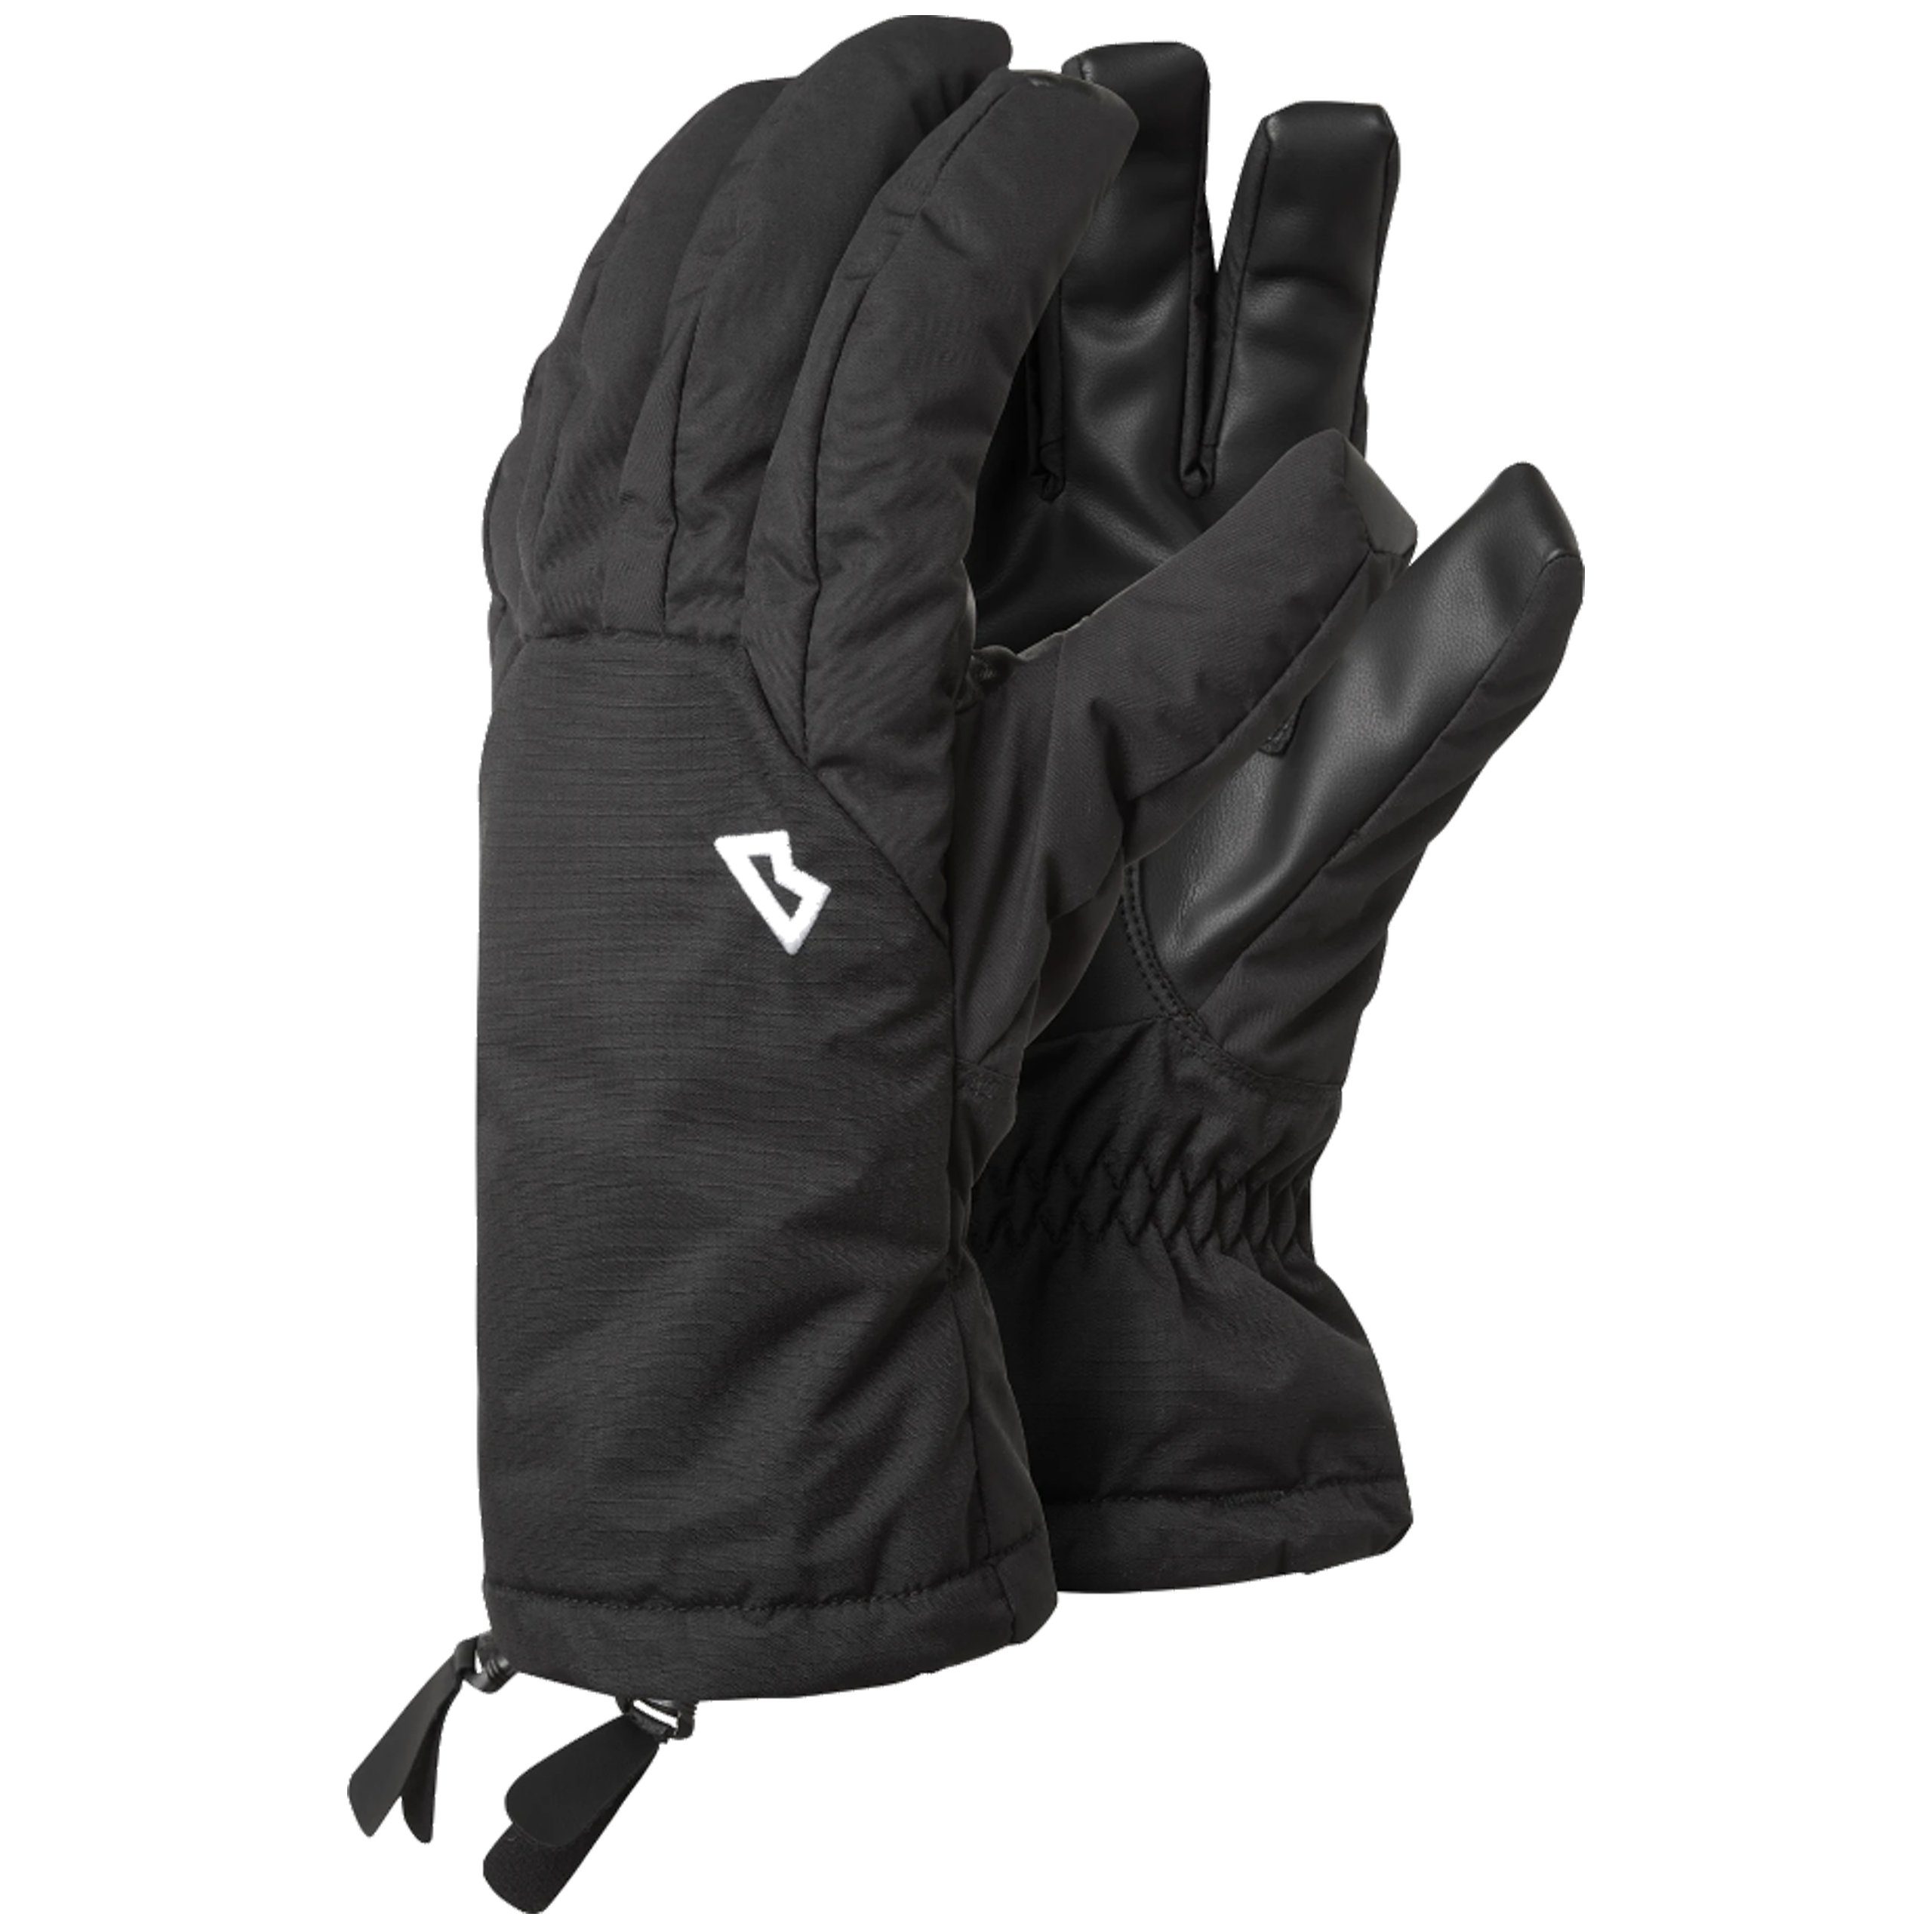 Glove Multisporthandschuhe - Mountain Equipment wasserdichte Winter-Bergsporthands Mountain Mountain Equipment